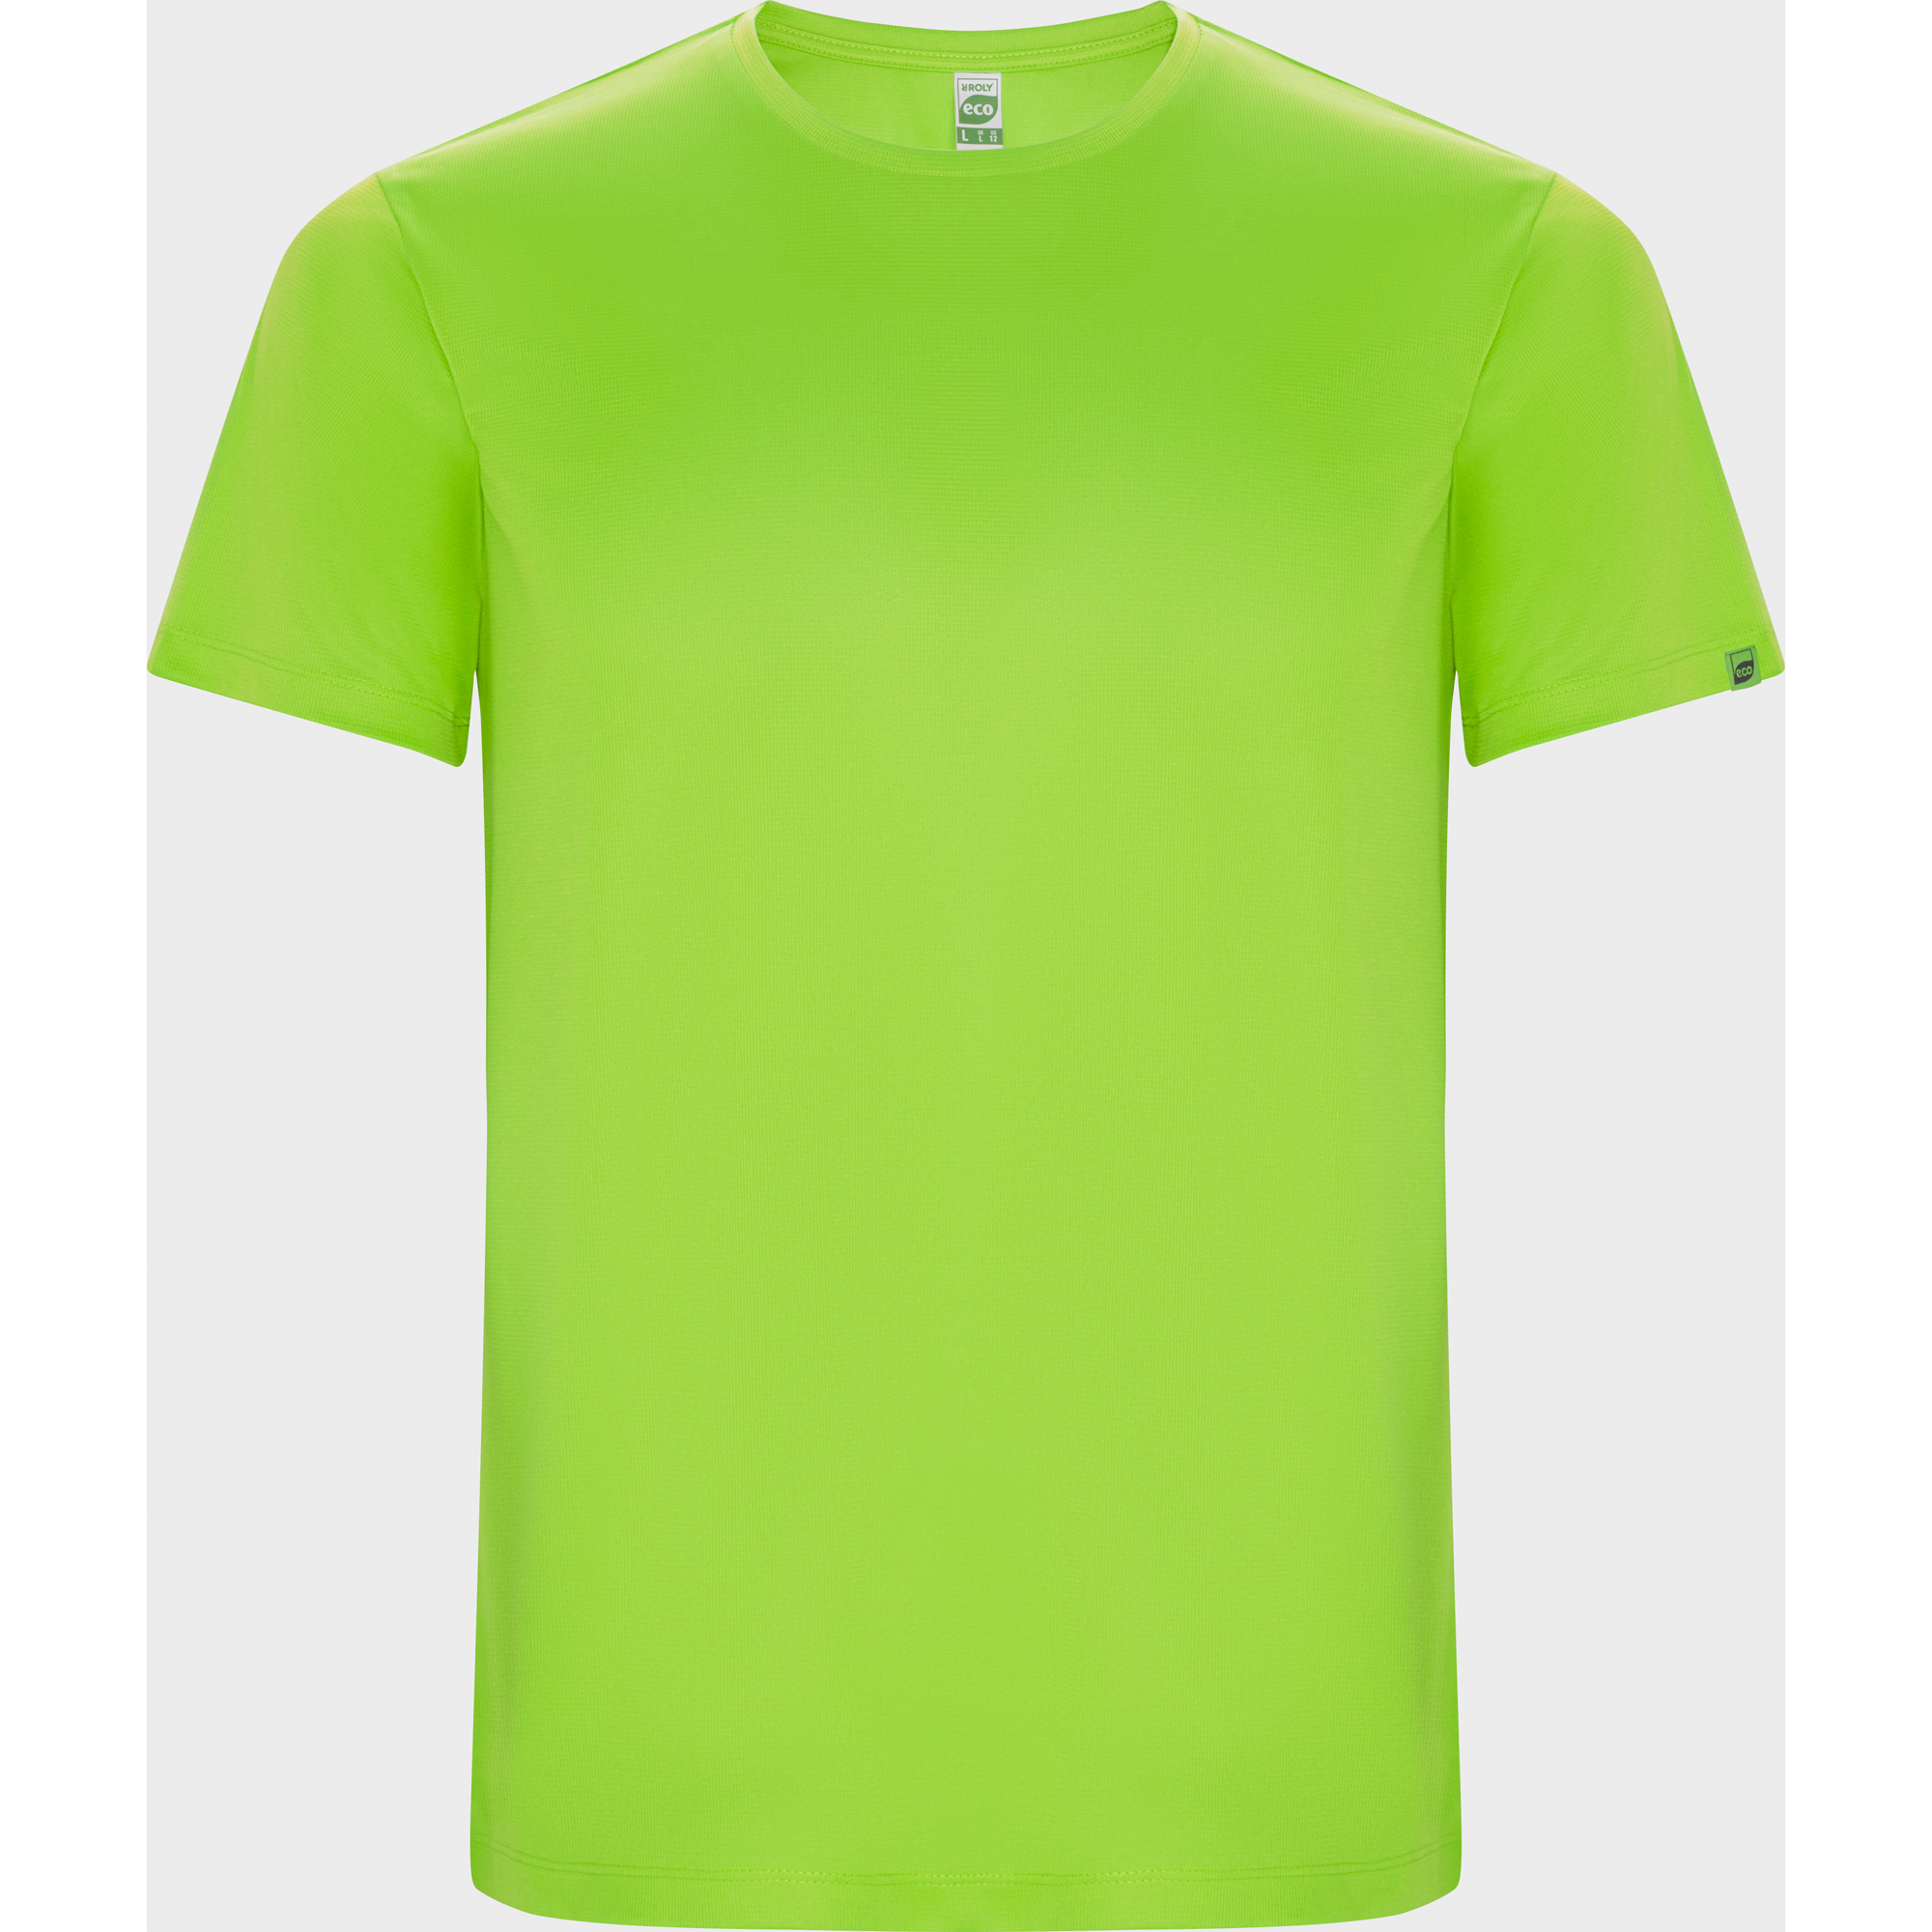 r0427-roly-imola-t-shirt-tecnica-verde-fluo.jpg